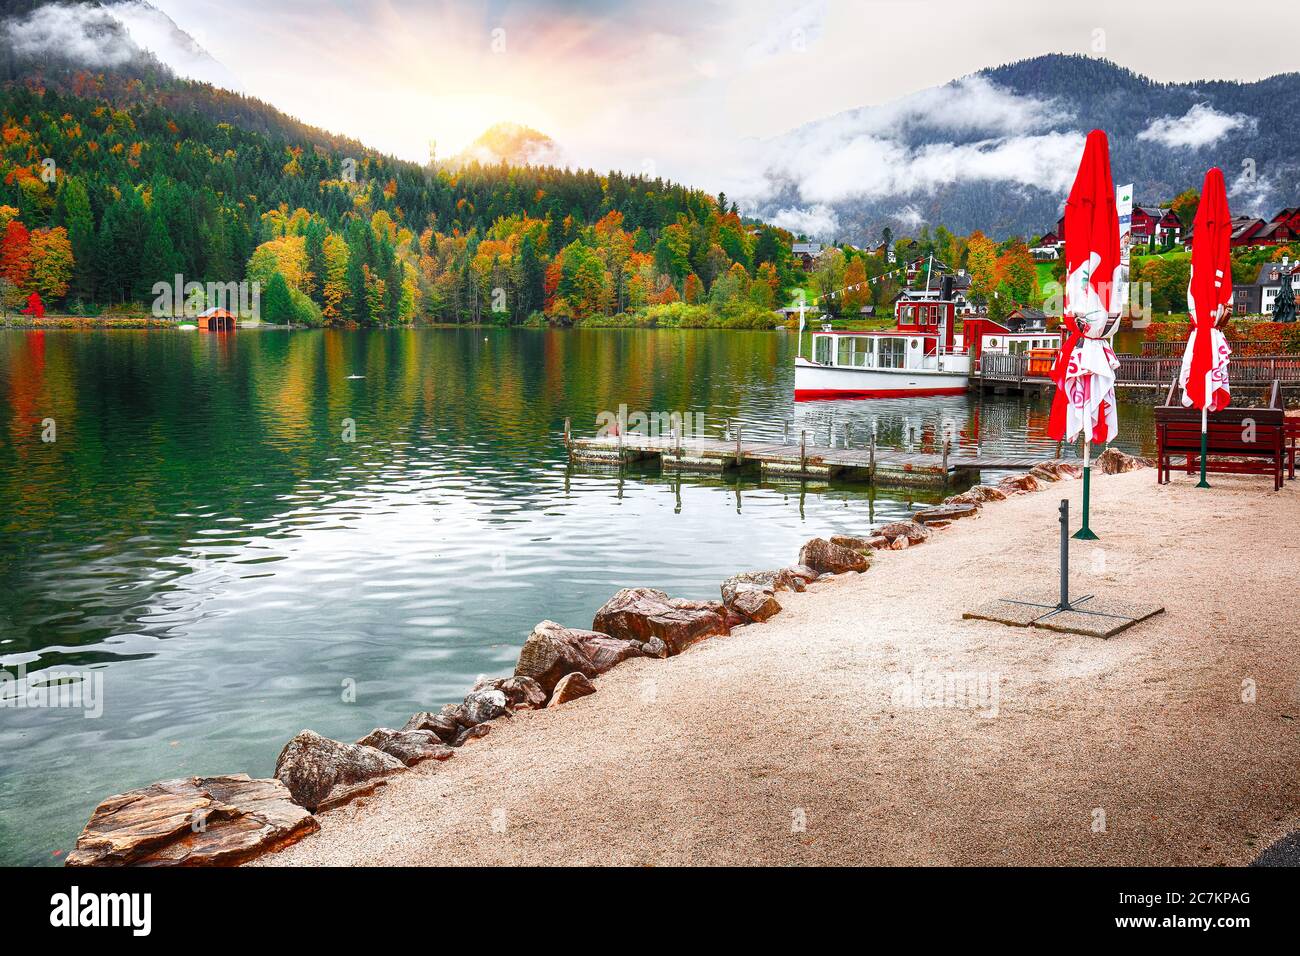 Idyllic autumn scene in Grundlsee lake. Location: resort Grundlsee, Liezen District of Styria, Austria, Alps. Europe. Stock Photo